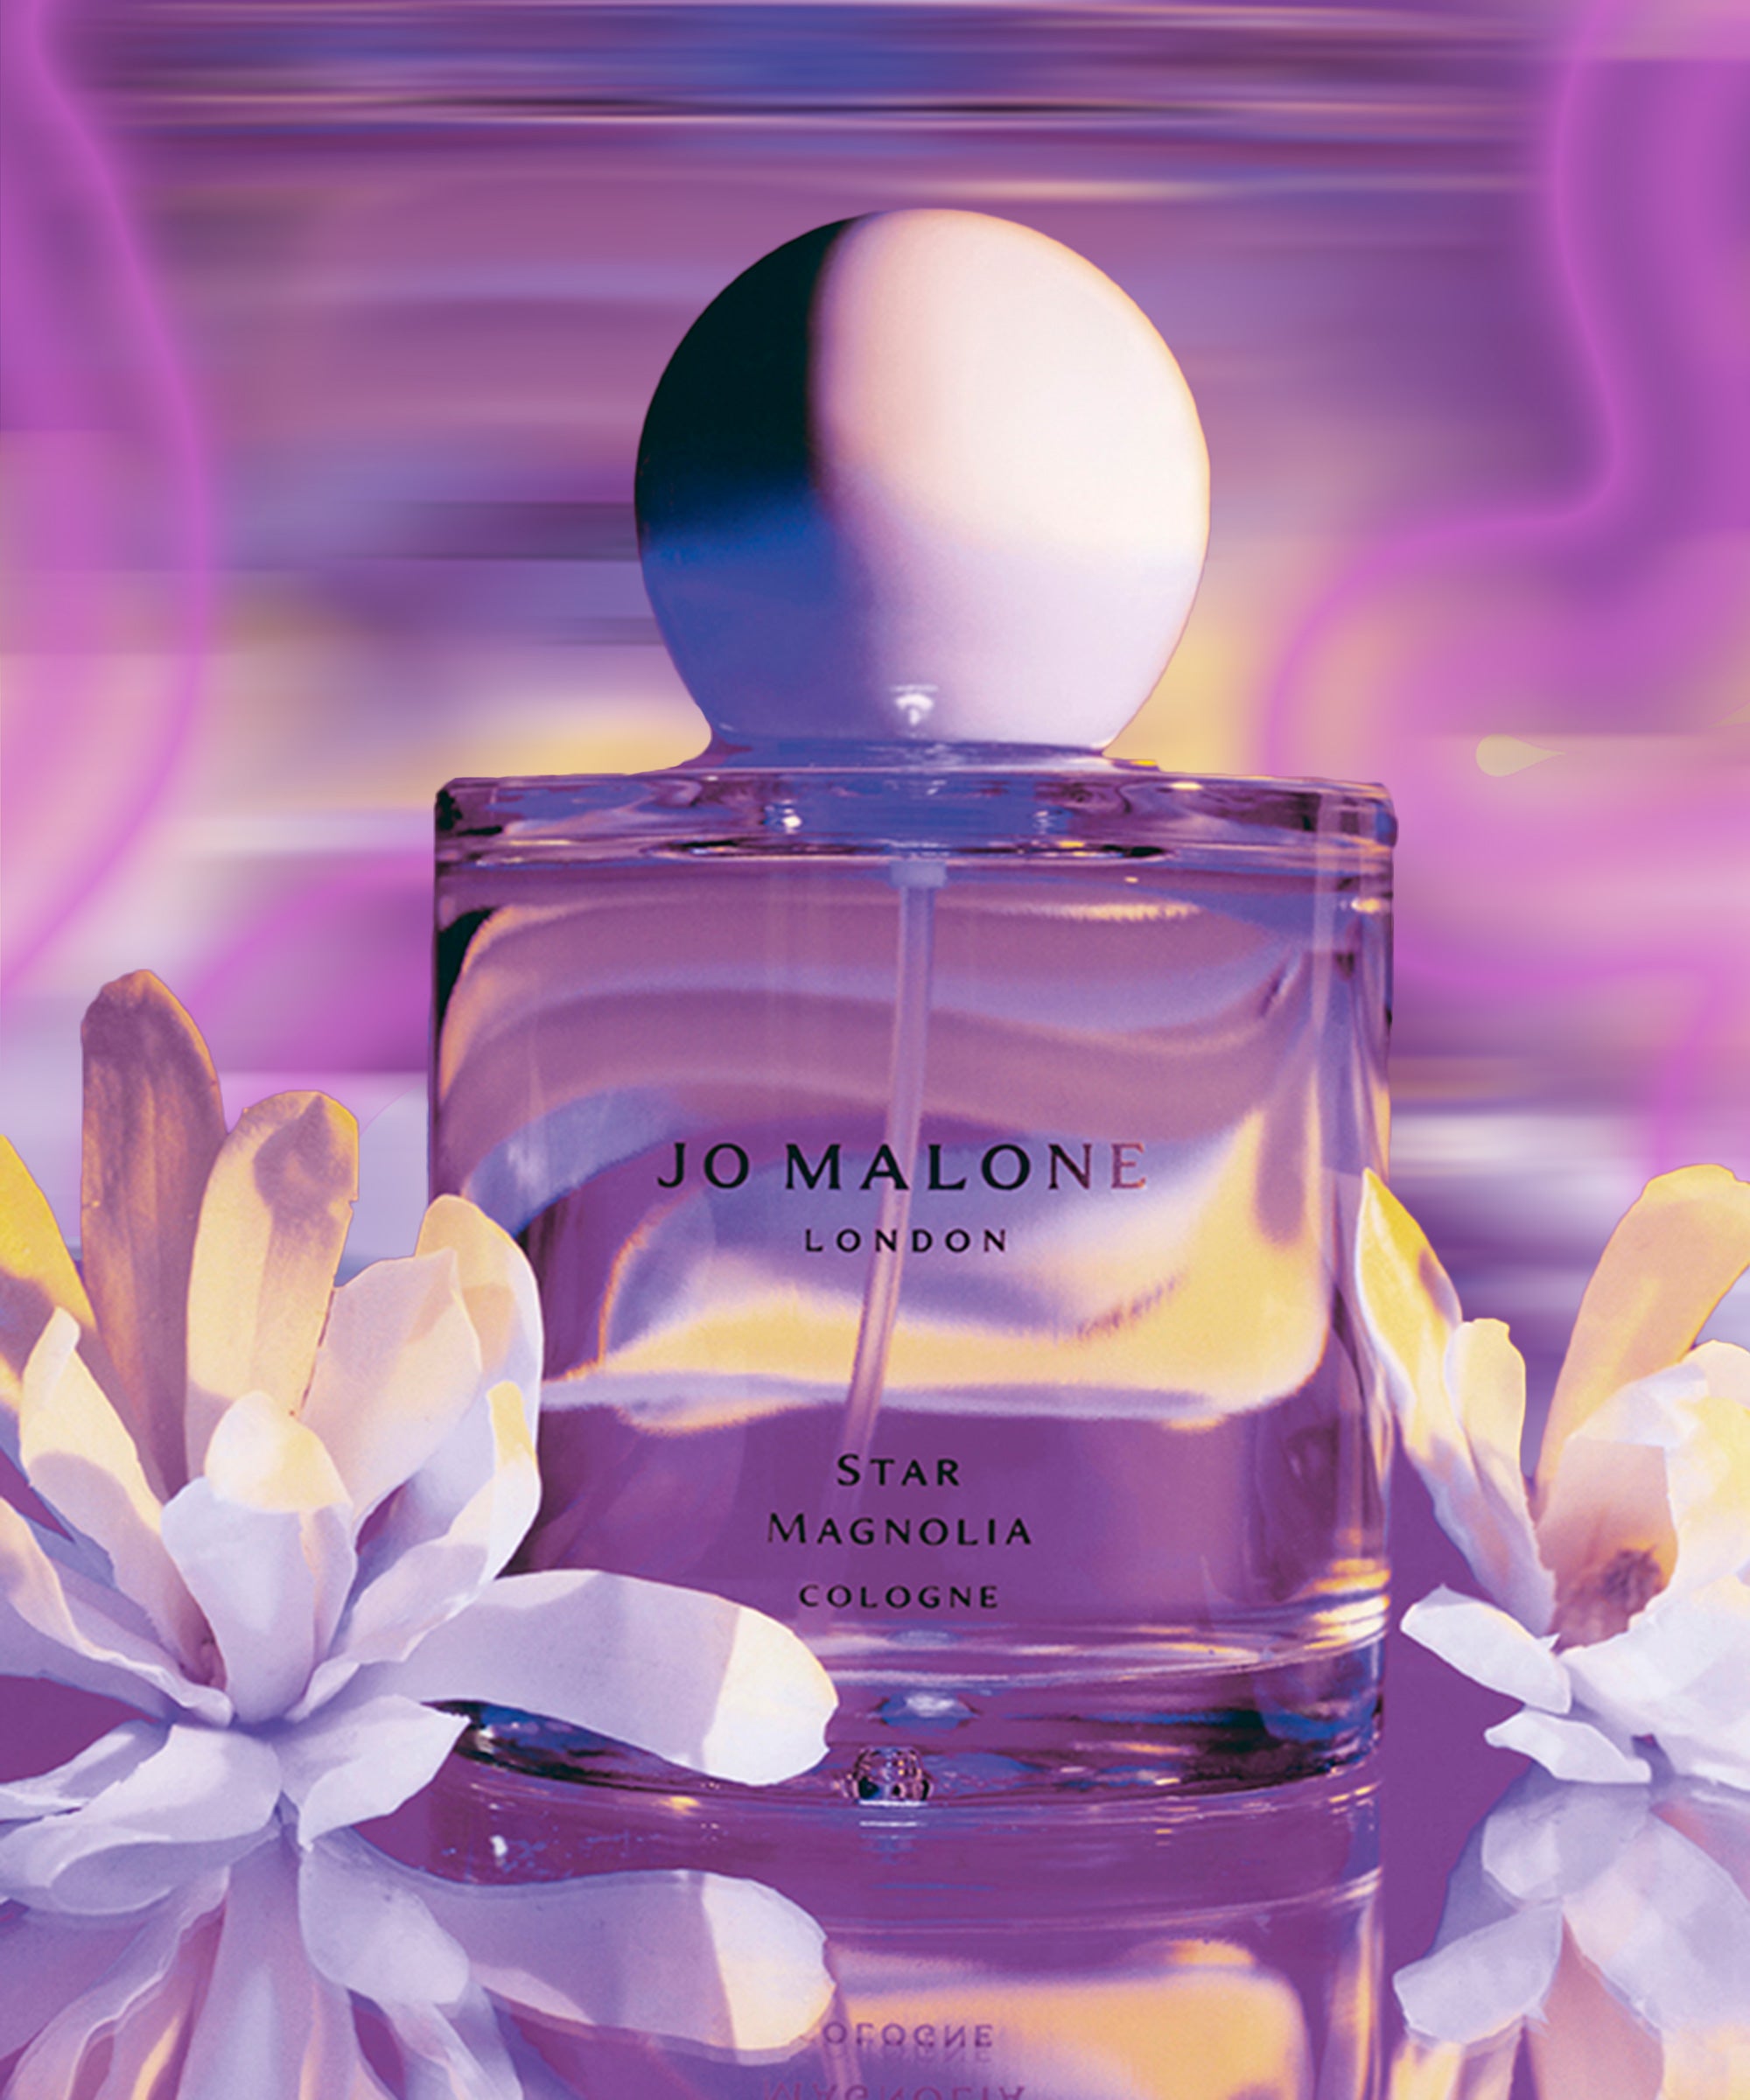 Seeking Perfume Dupe for Victoria's Secret Orange Flower Sun : r/Perfumes